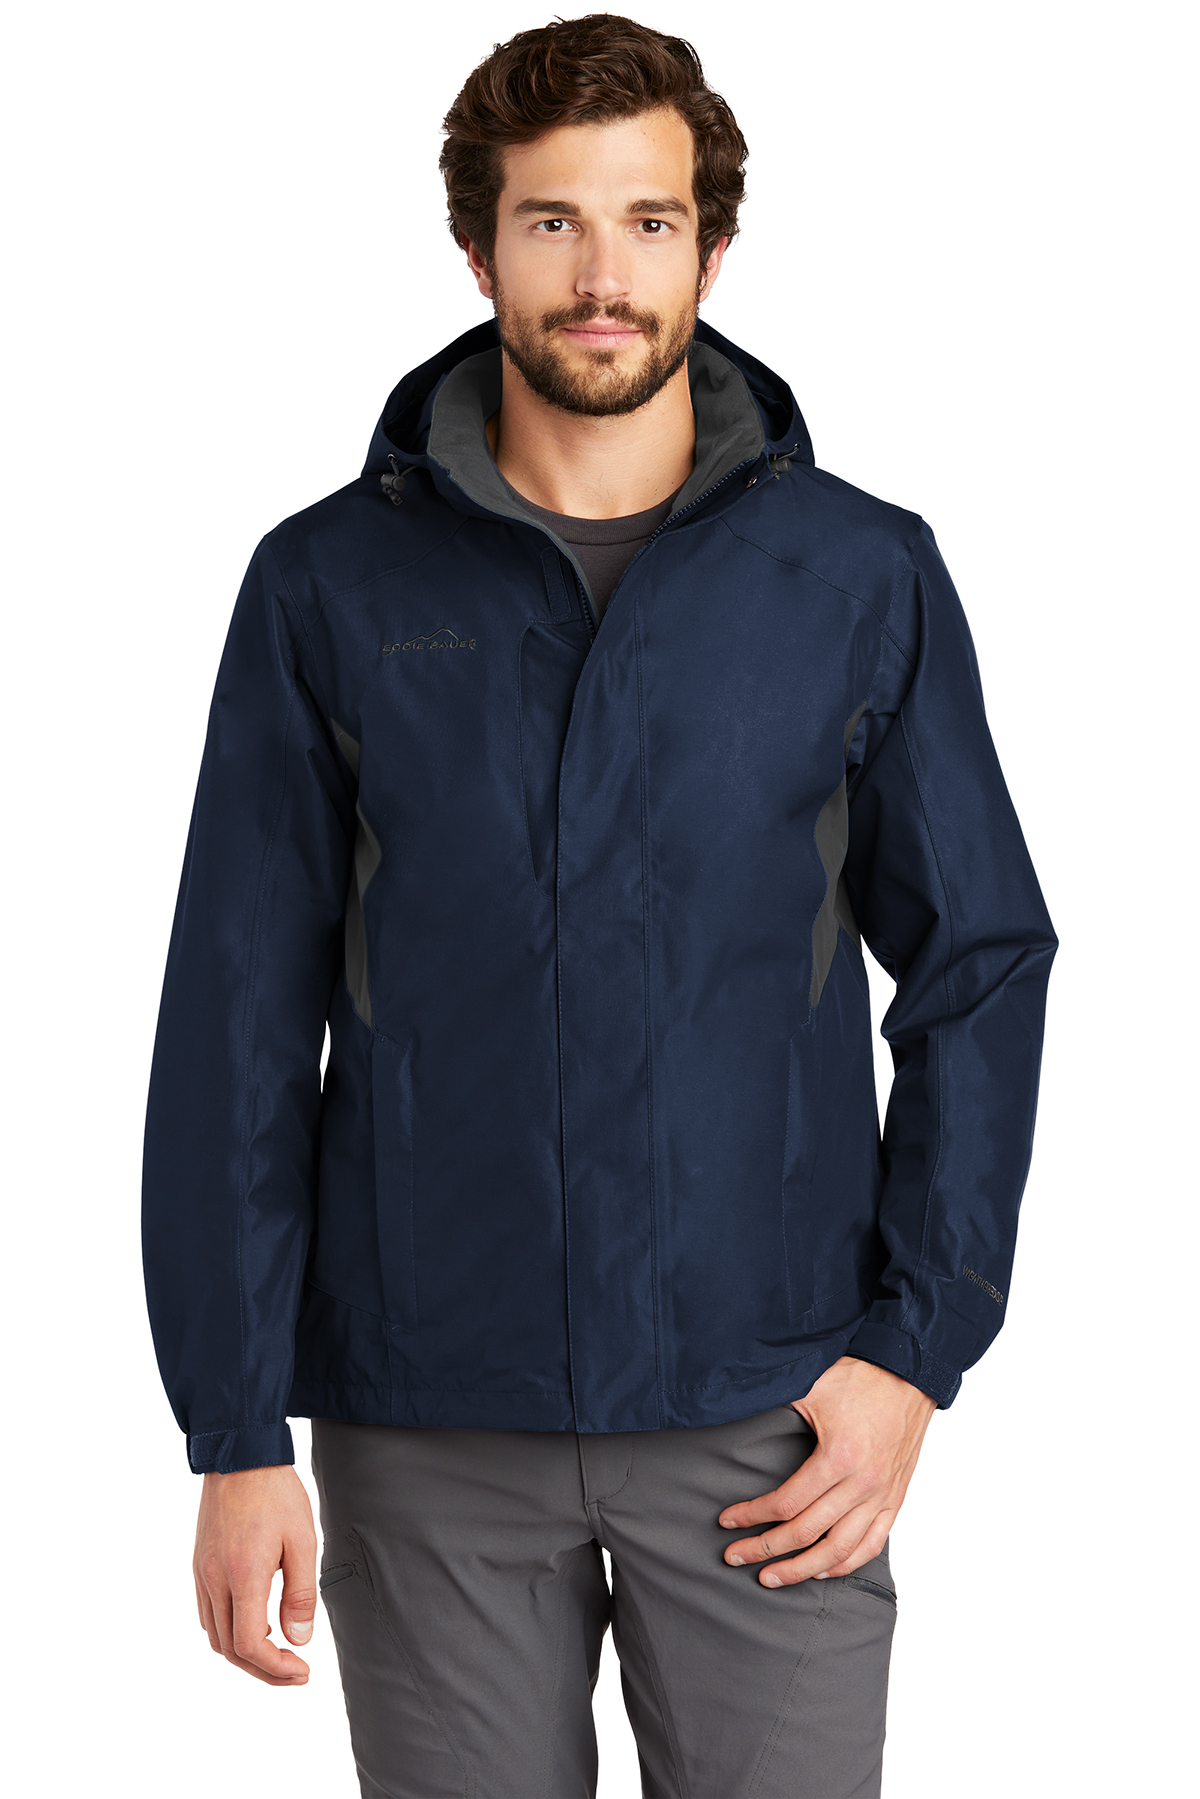 Eddie Bauer - Rain Jacket | Product | Company Casuals